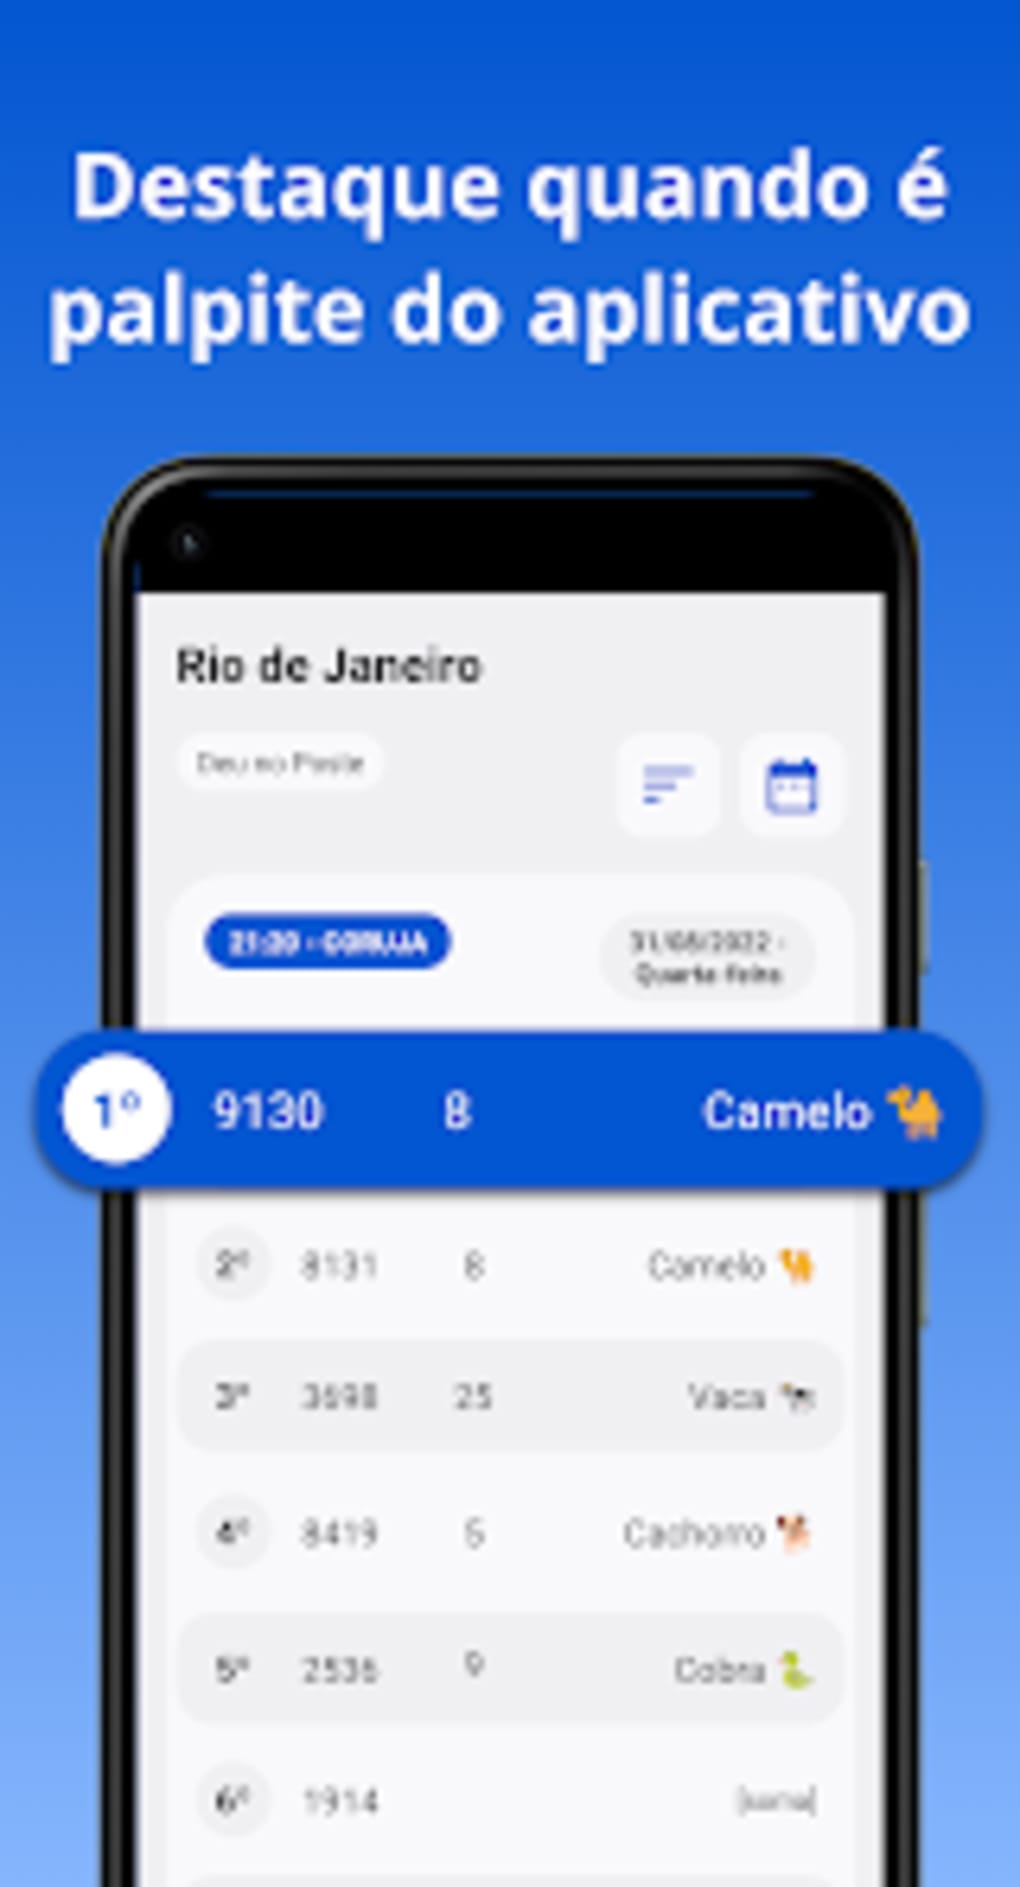 Palpites do Bicho no Celular - Apps on Google Play